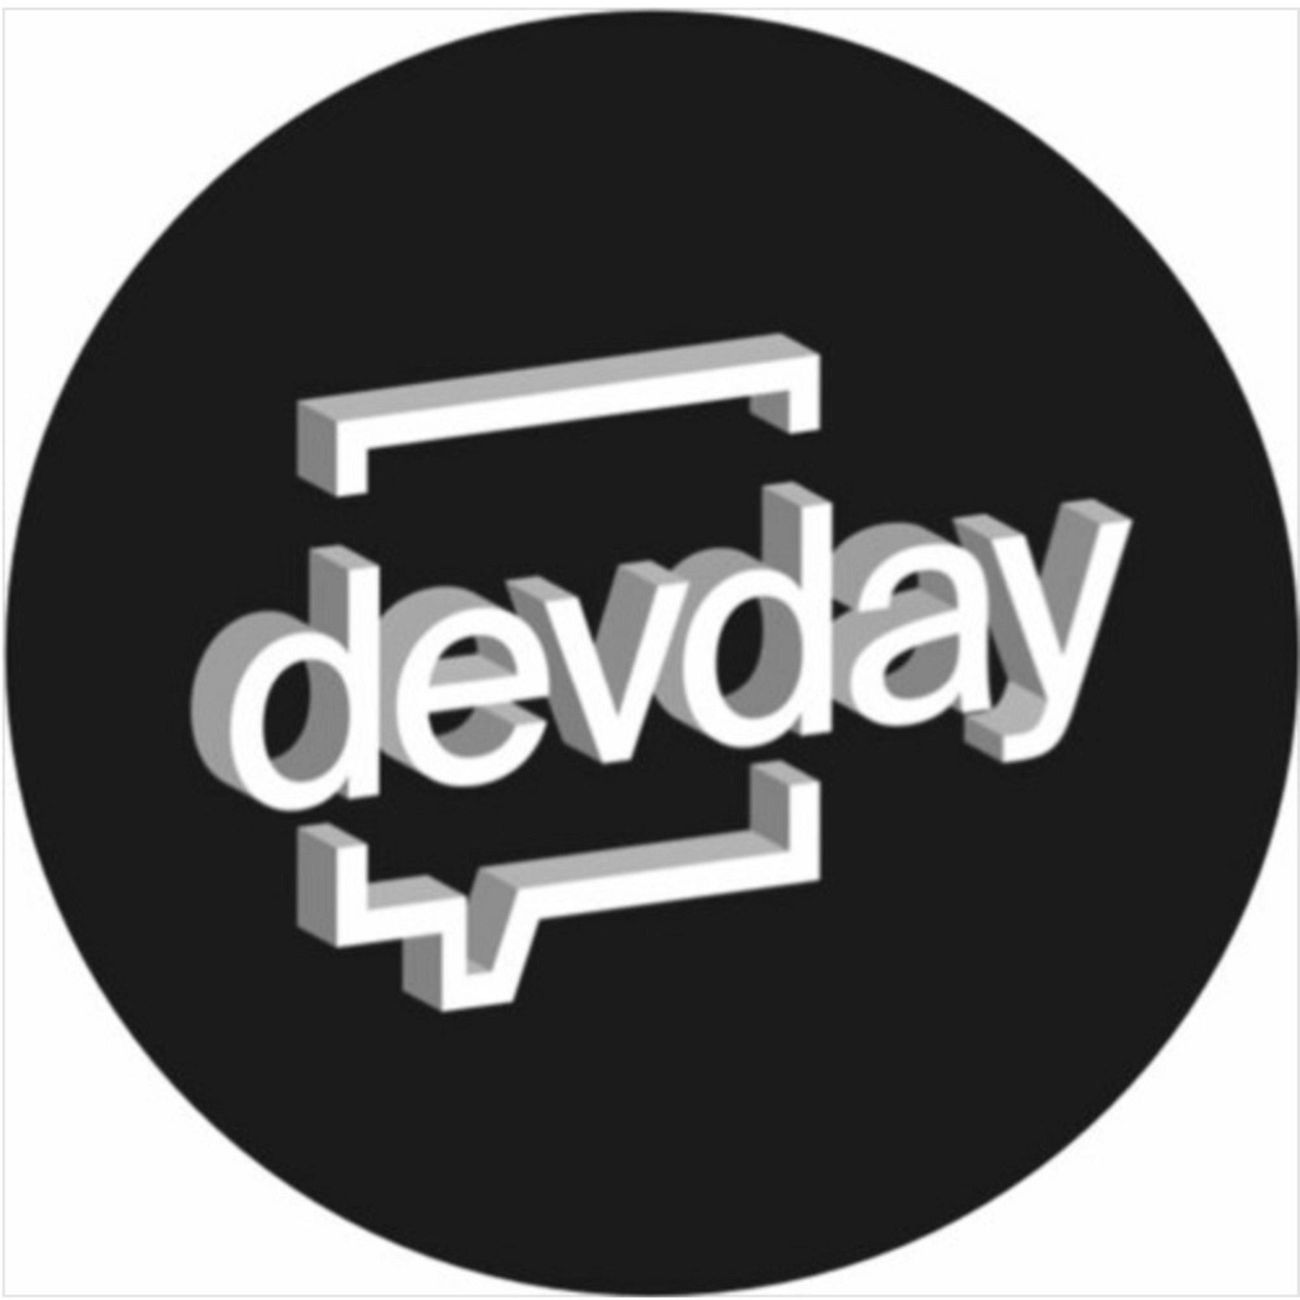 DevDay Podcast